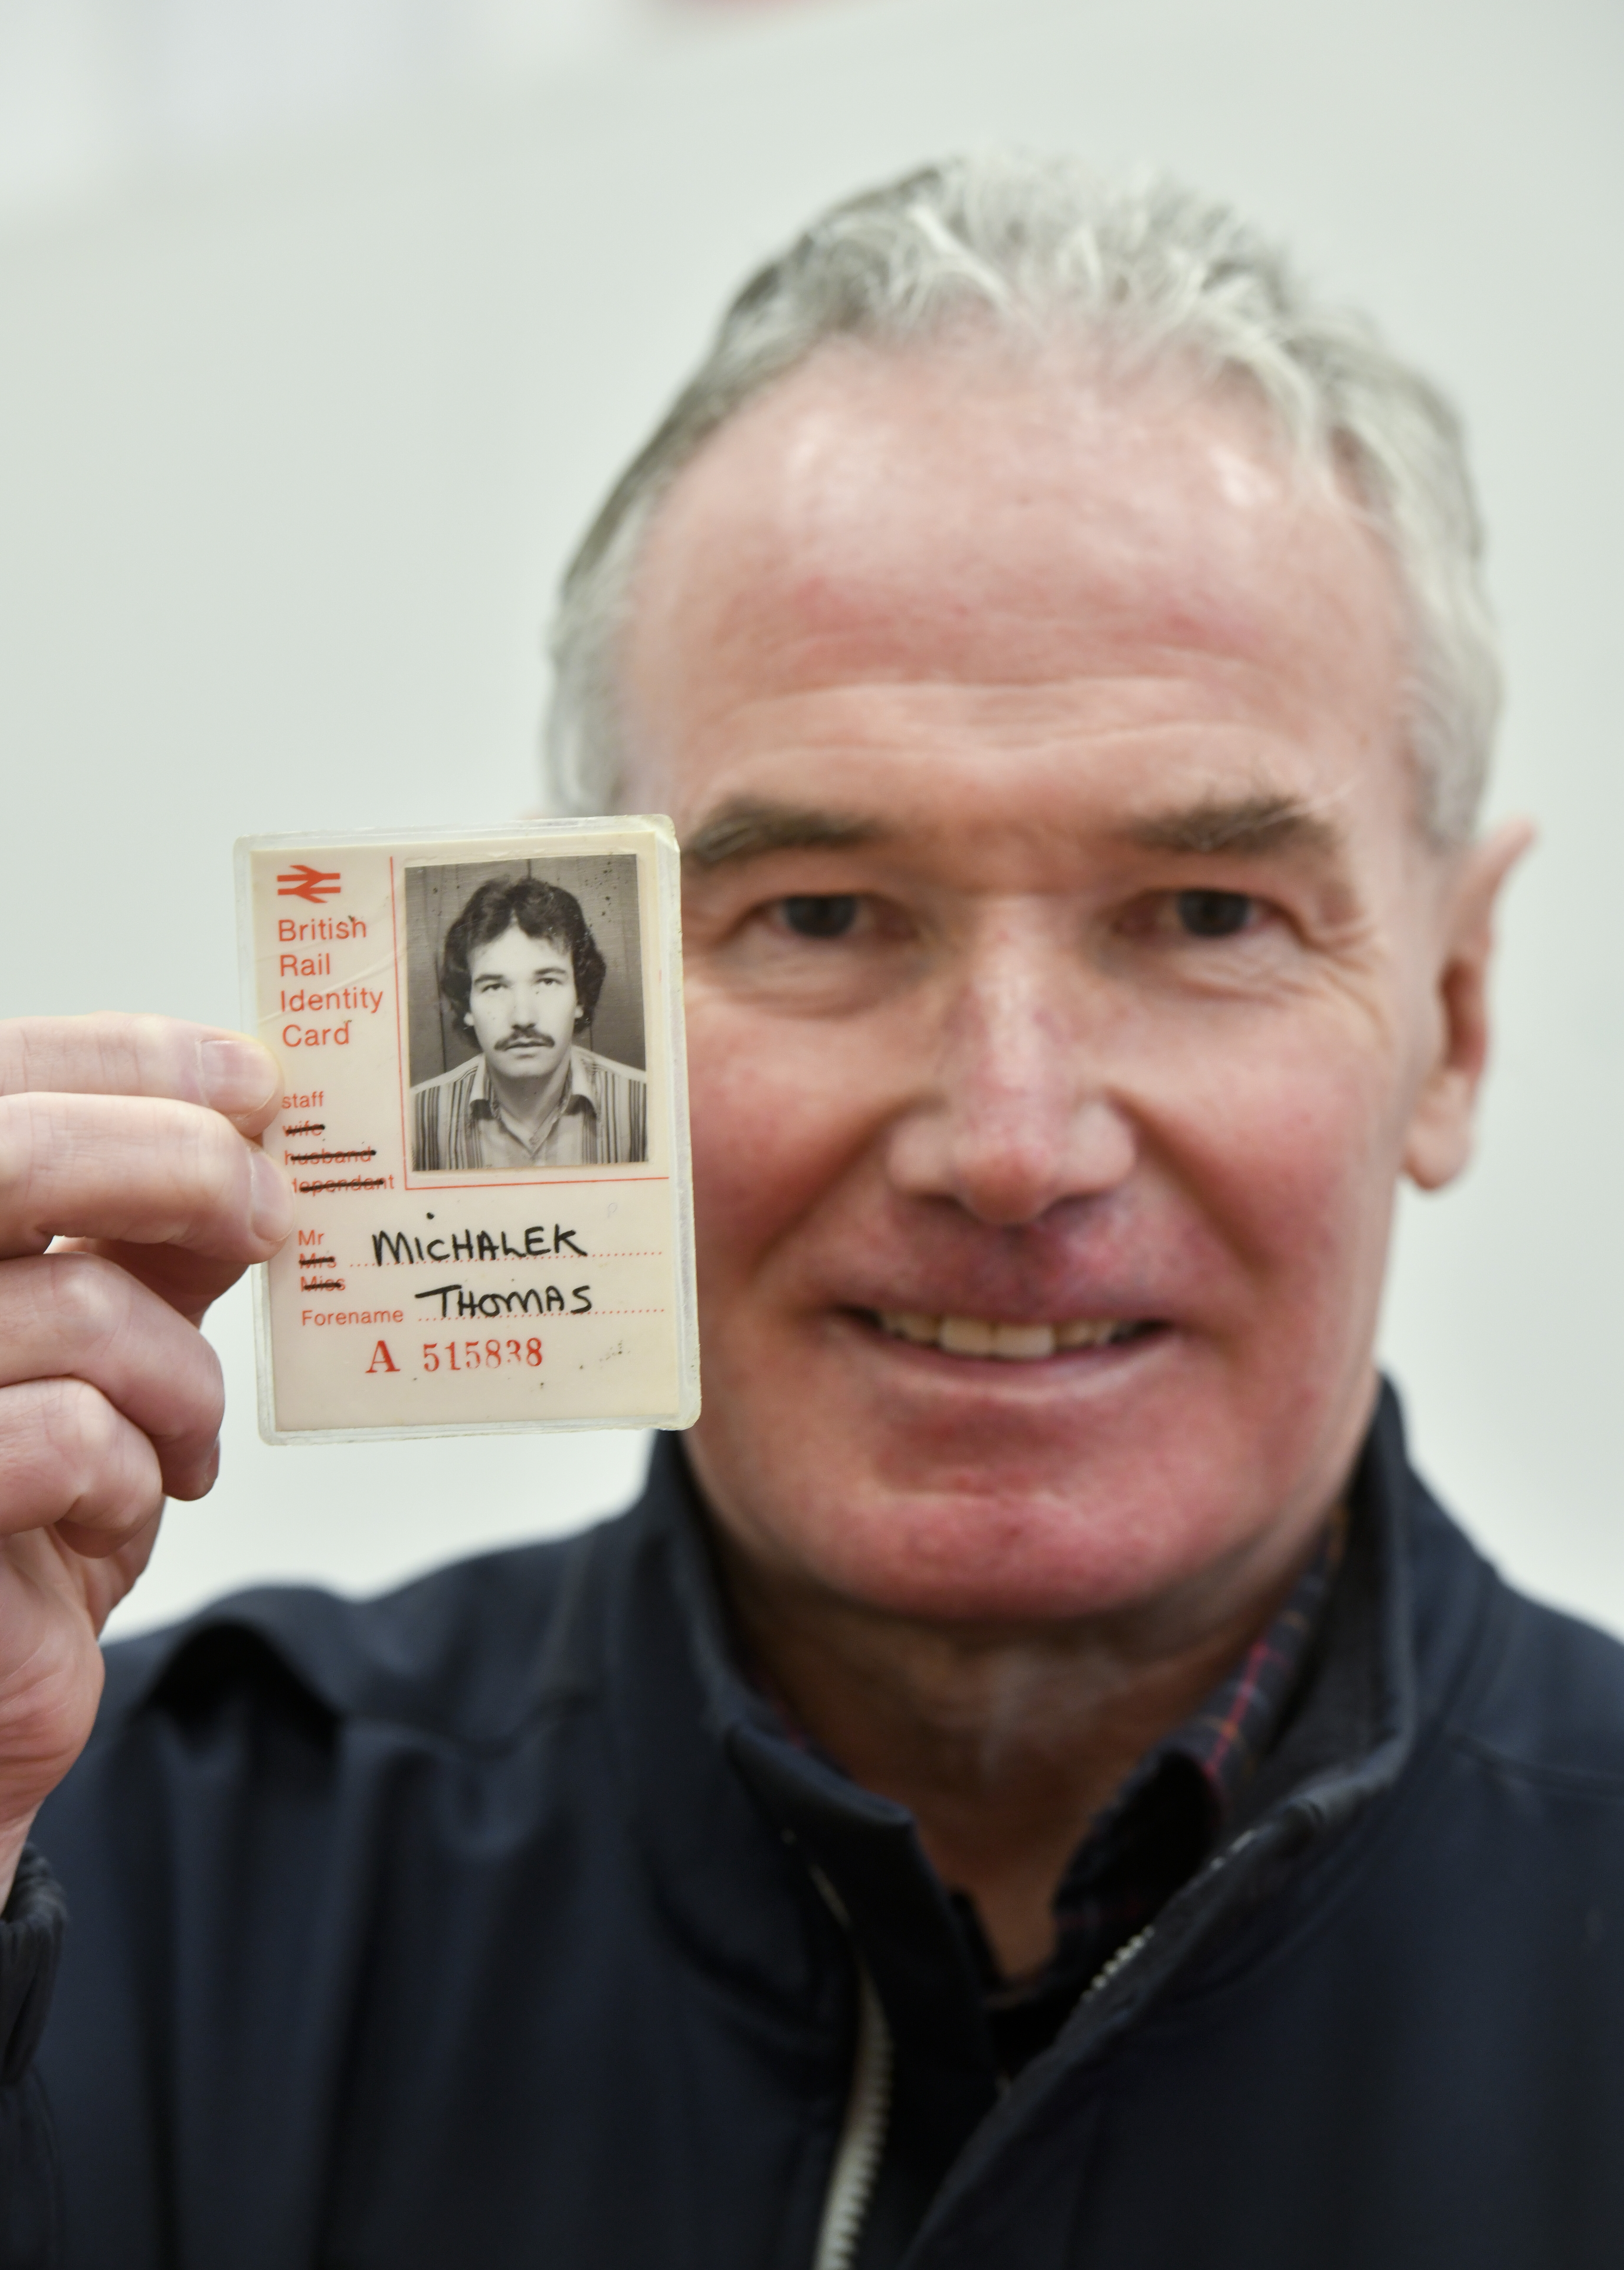 Tommy Michalek with his British Rail identity card